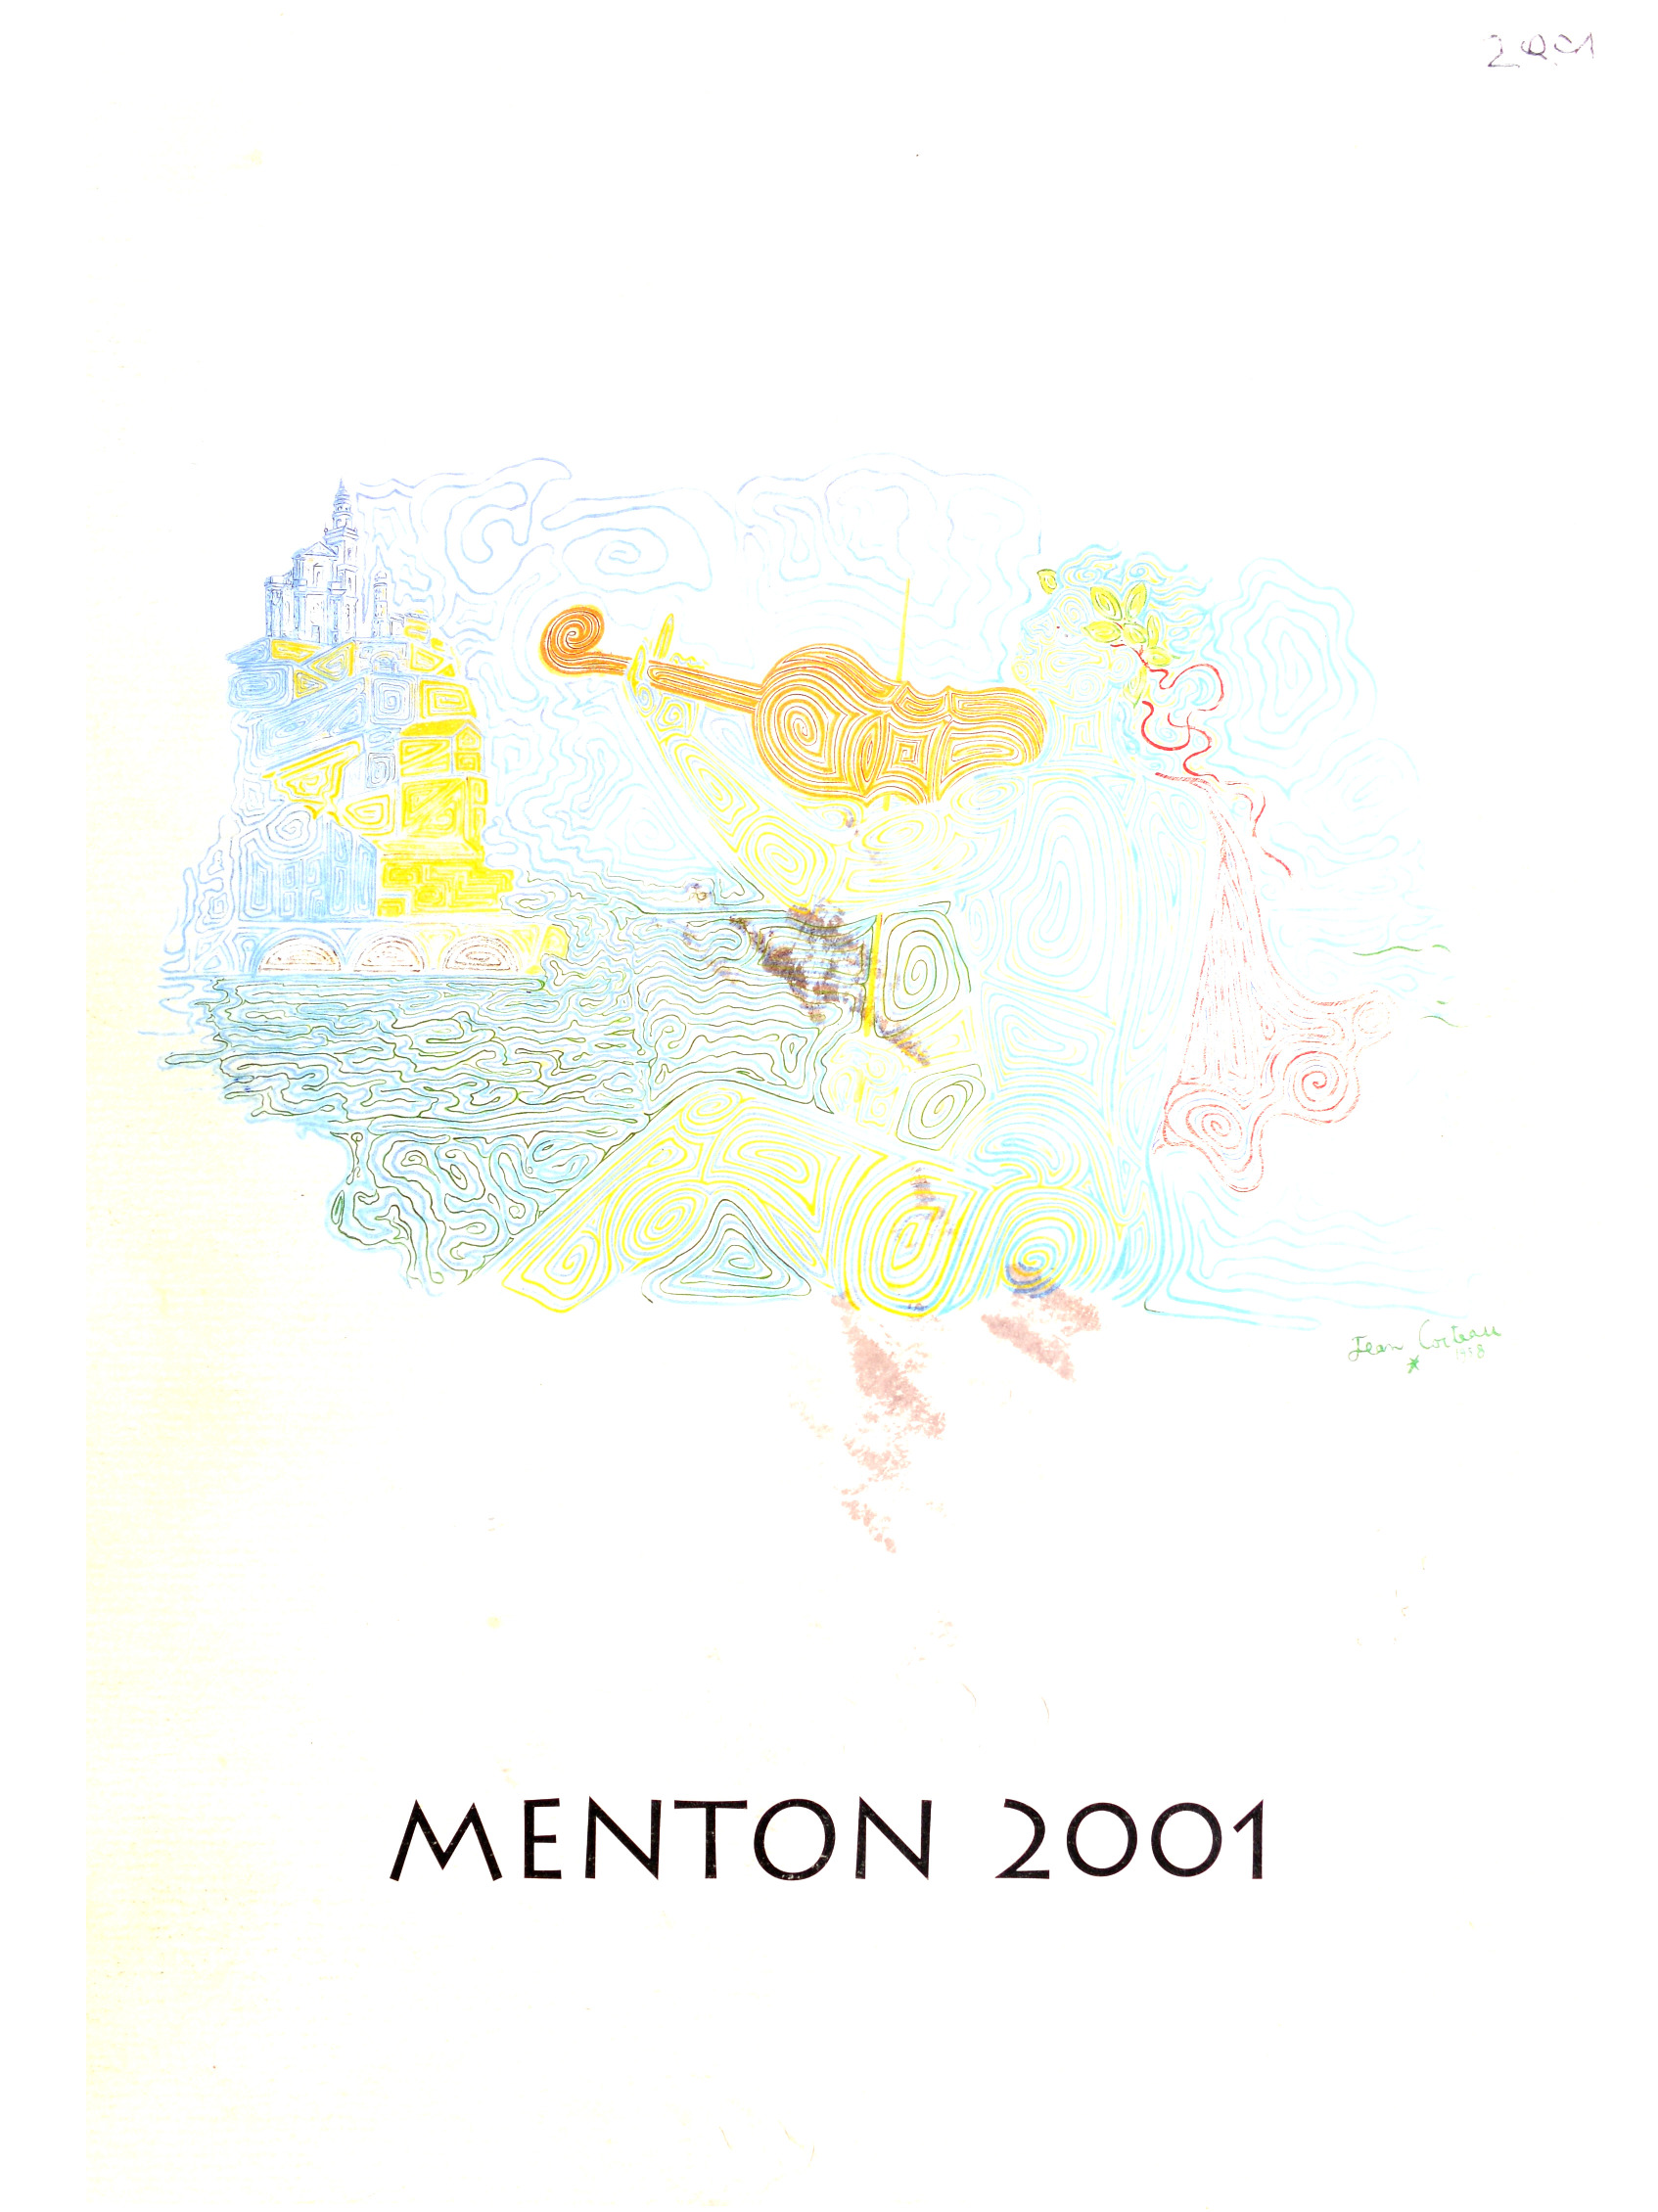 Festival de musique de Menton 2001